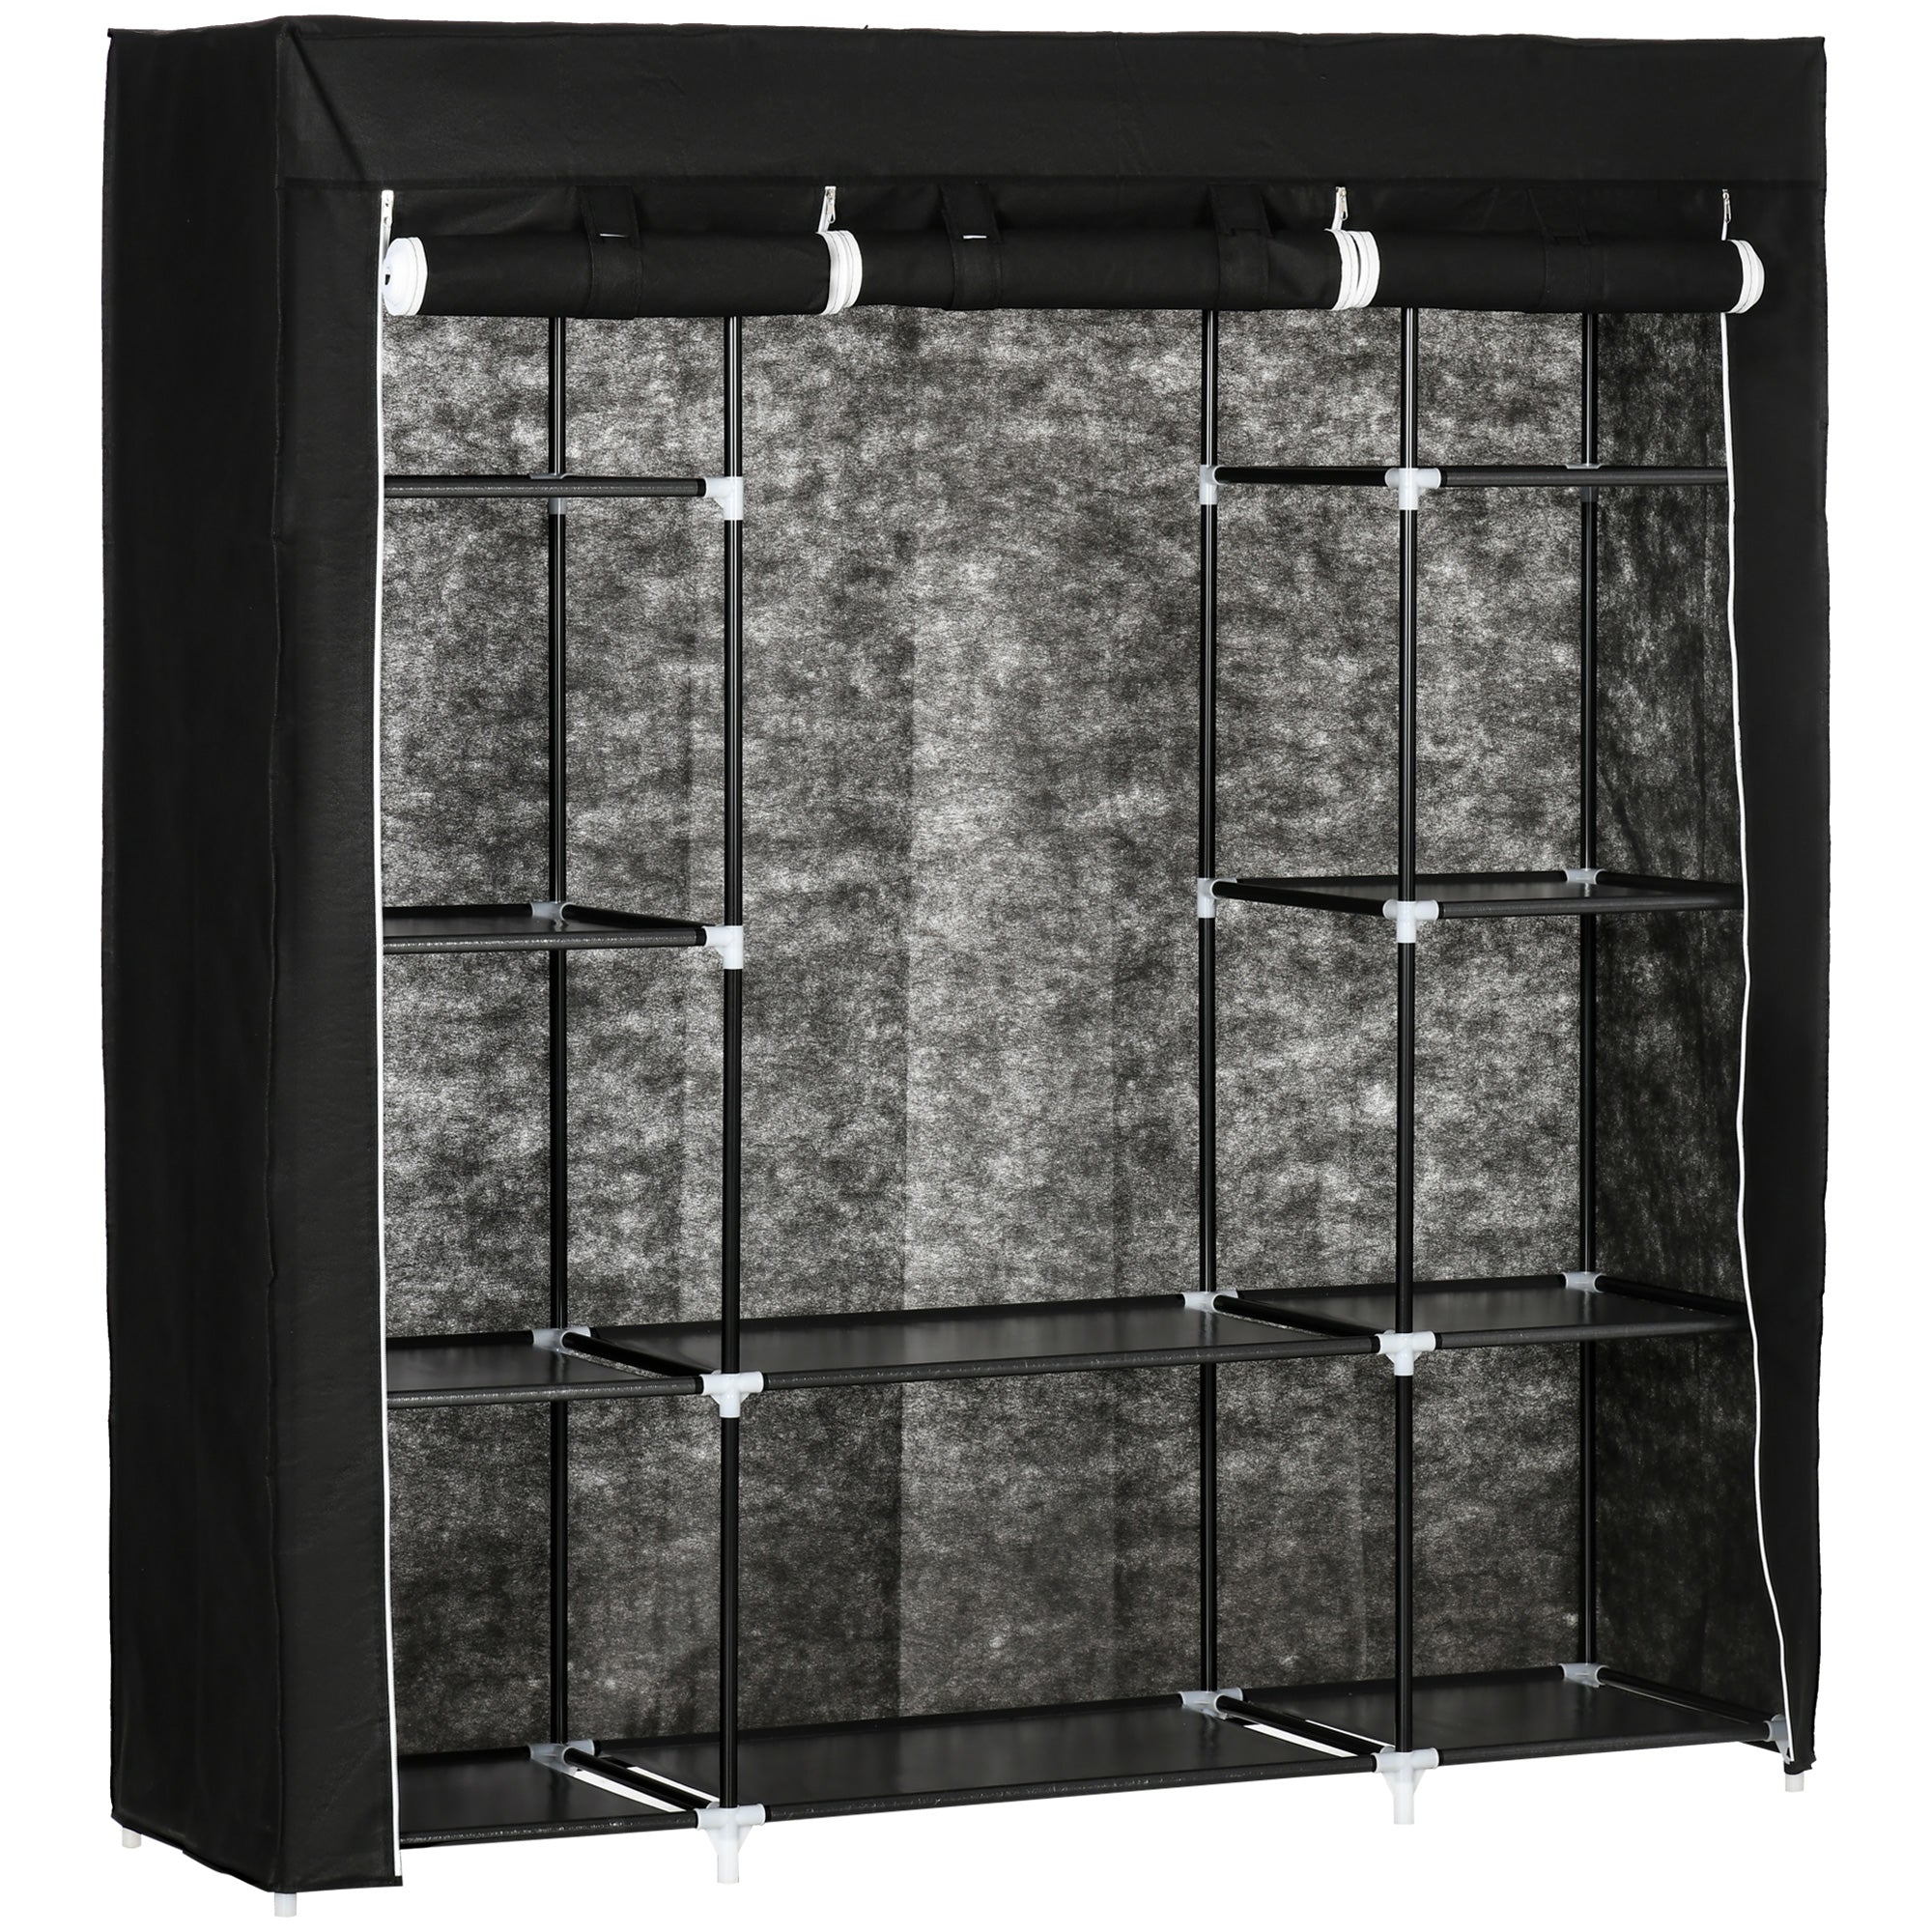 HOMCOM Fabric Wardrobe with 10 Shelves 1 Hanging Rail Foldable Closets Black  | TJ Hughes